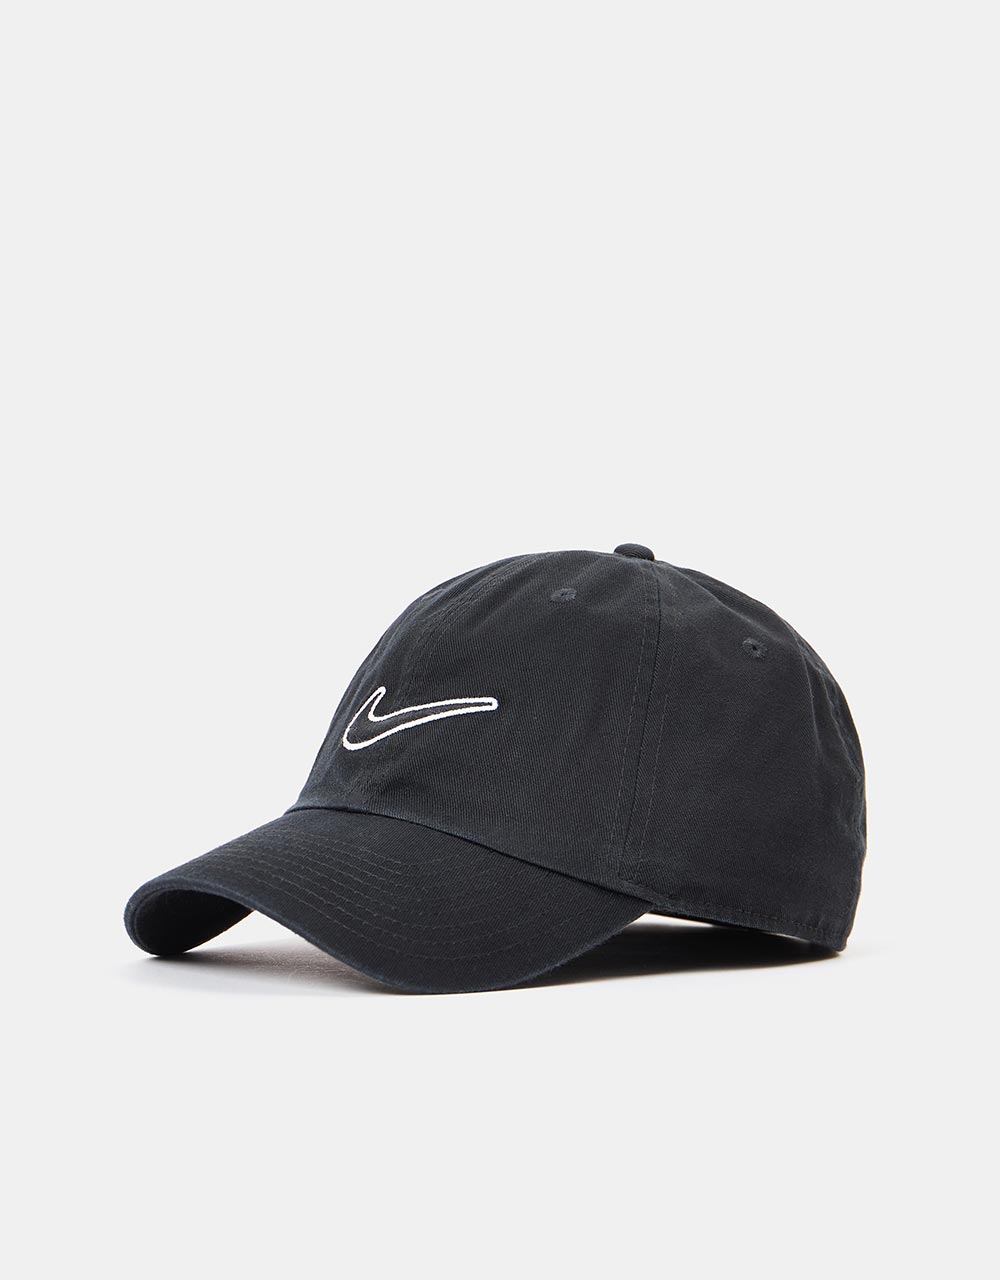 Nike Heritage 86 Cap - Black/Black